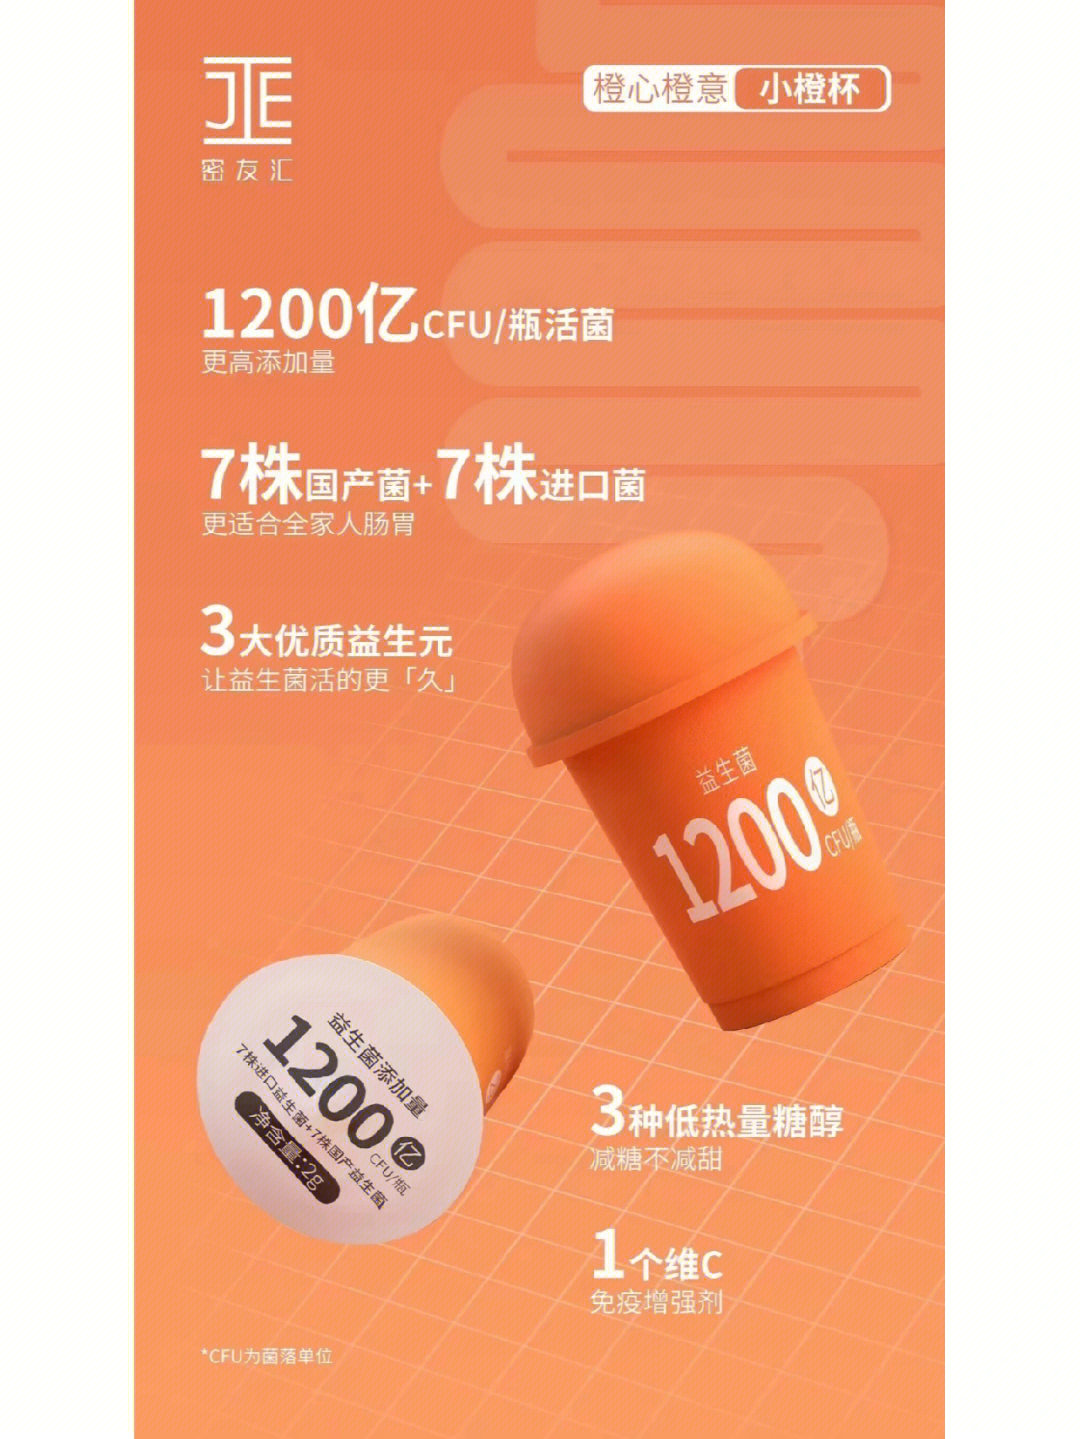 je小橙罐1200亿cfu瓶活菌